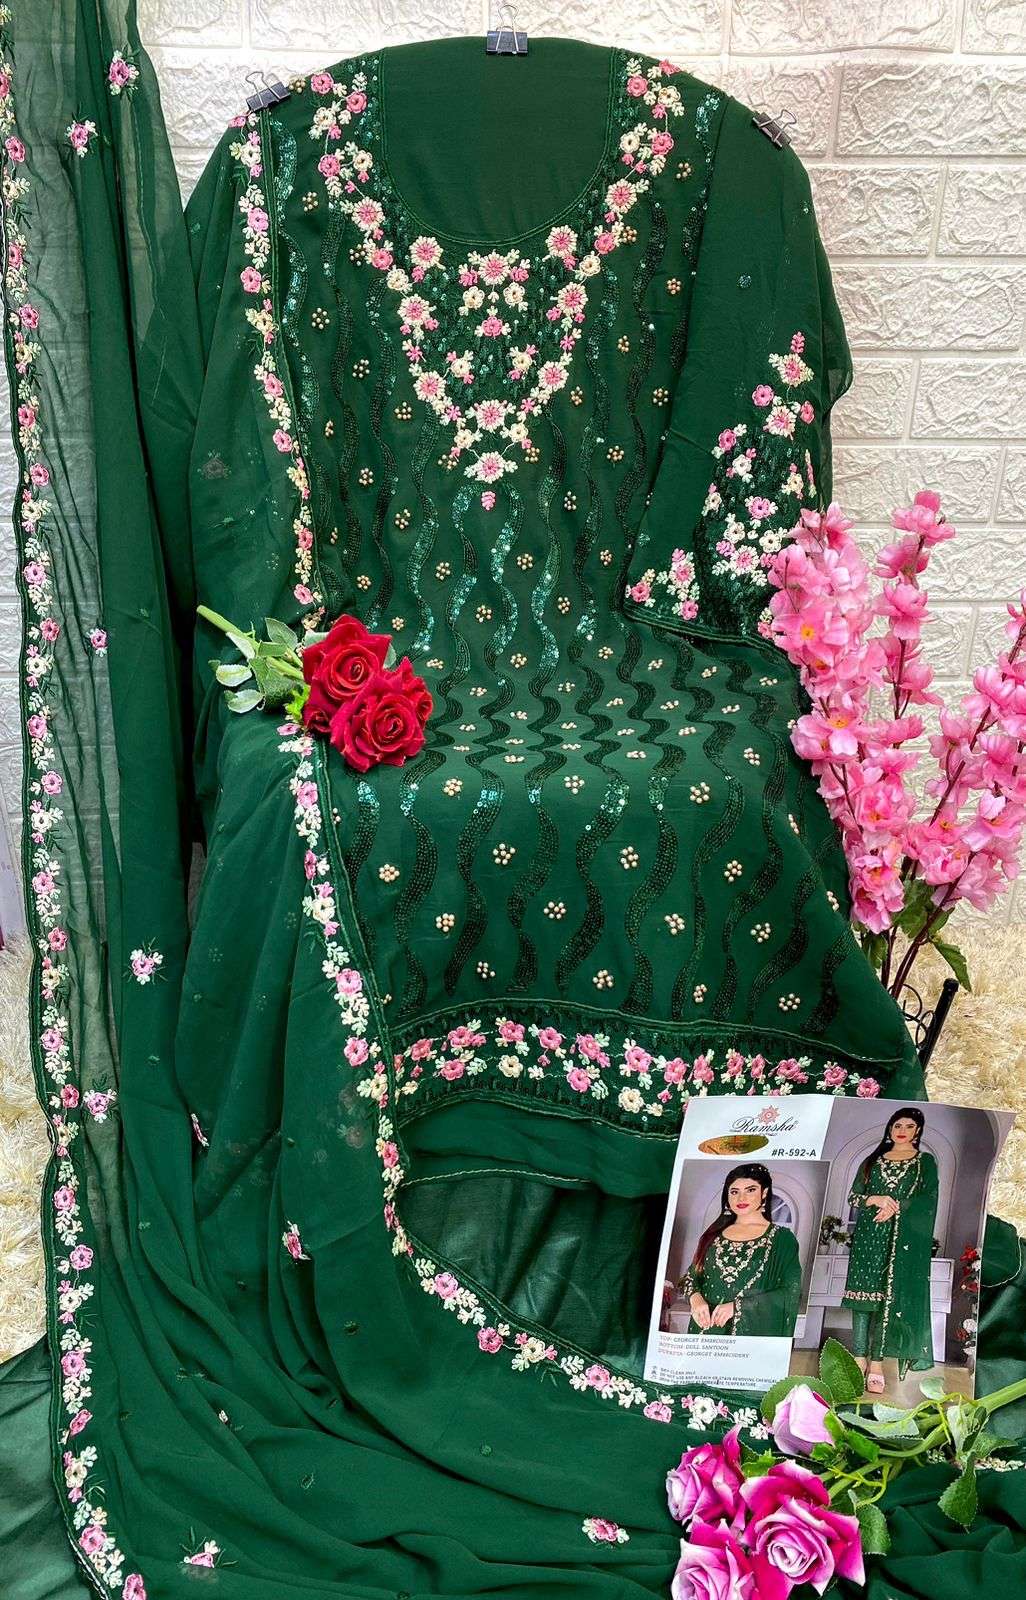 ramsha 592 nx georgette designer pakistani salwar kameez collection 2023 